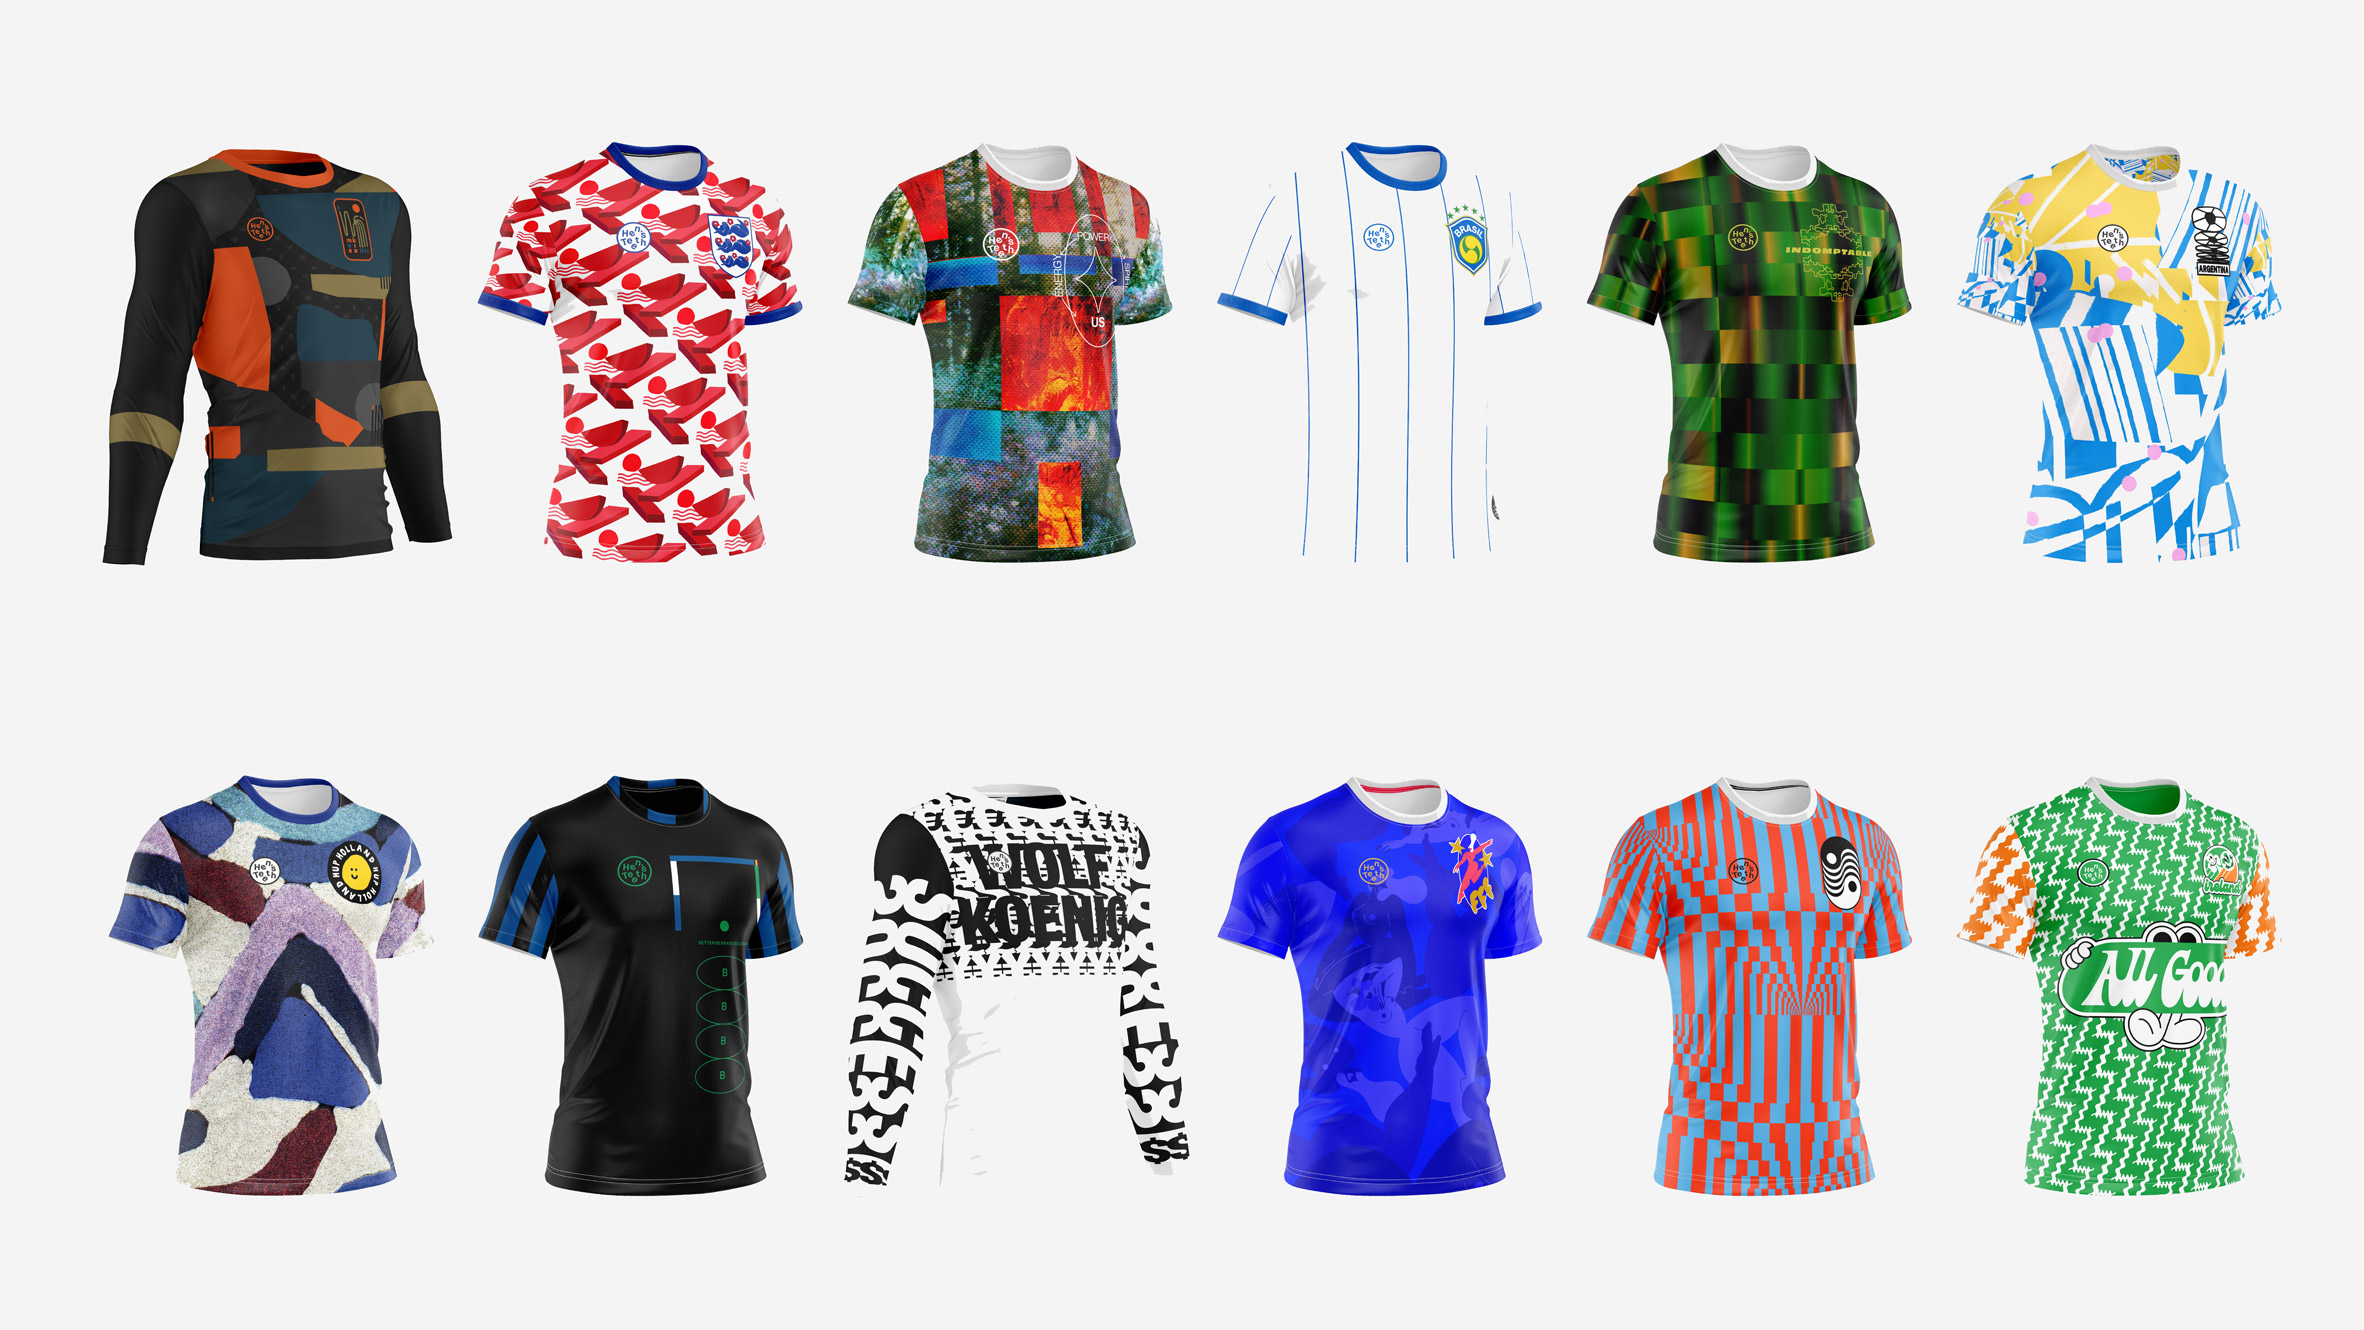 The Goallissimo football jersey collection